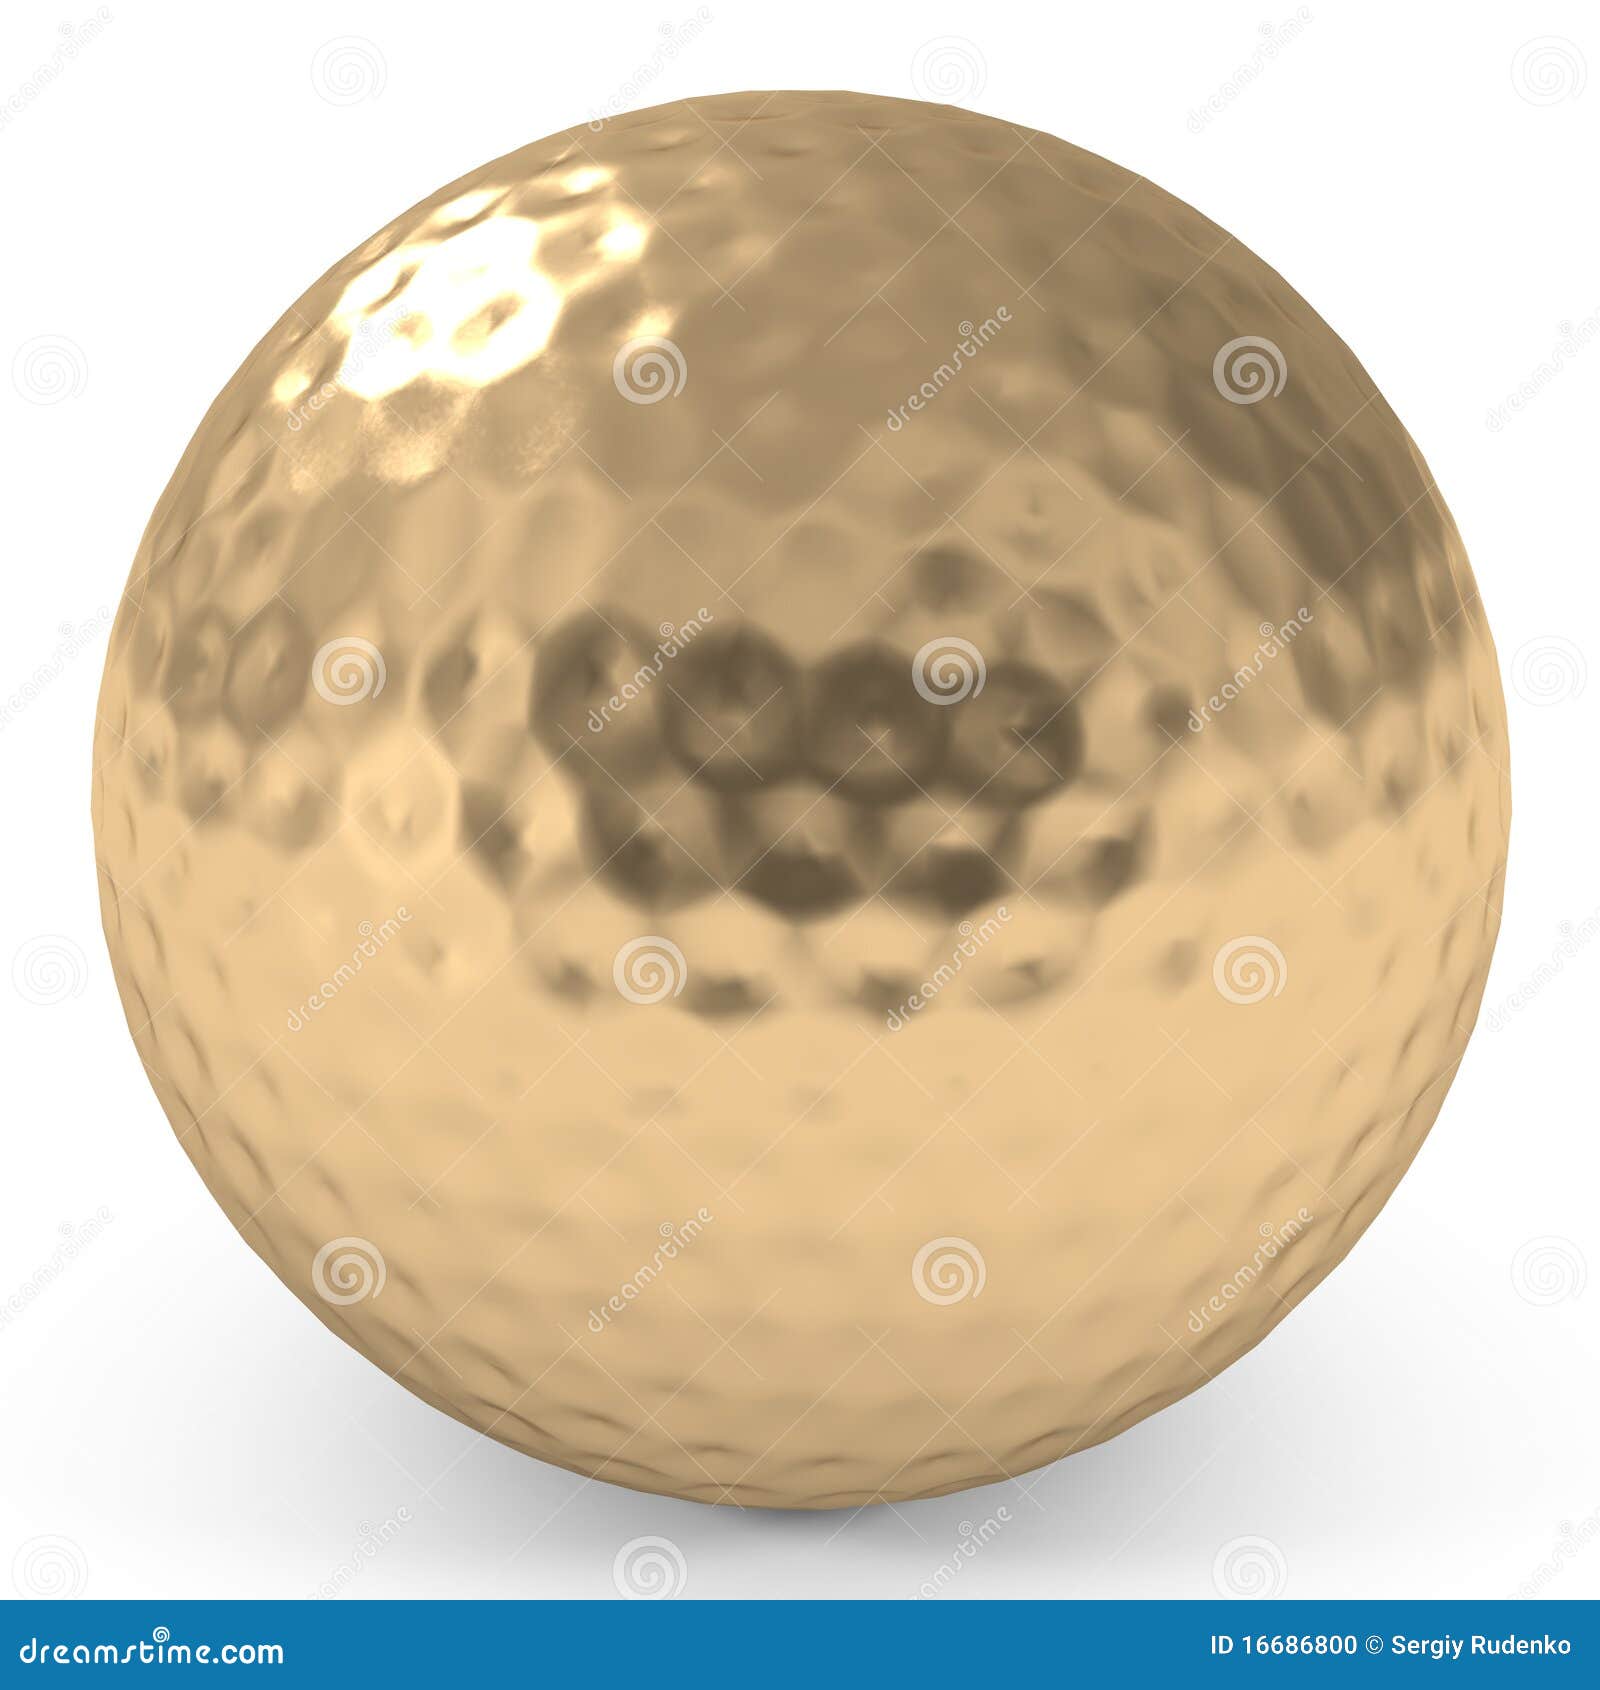 Golden Golf Ball Isolated on White Stock Illustration - Illustration of ...